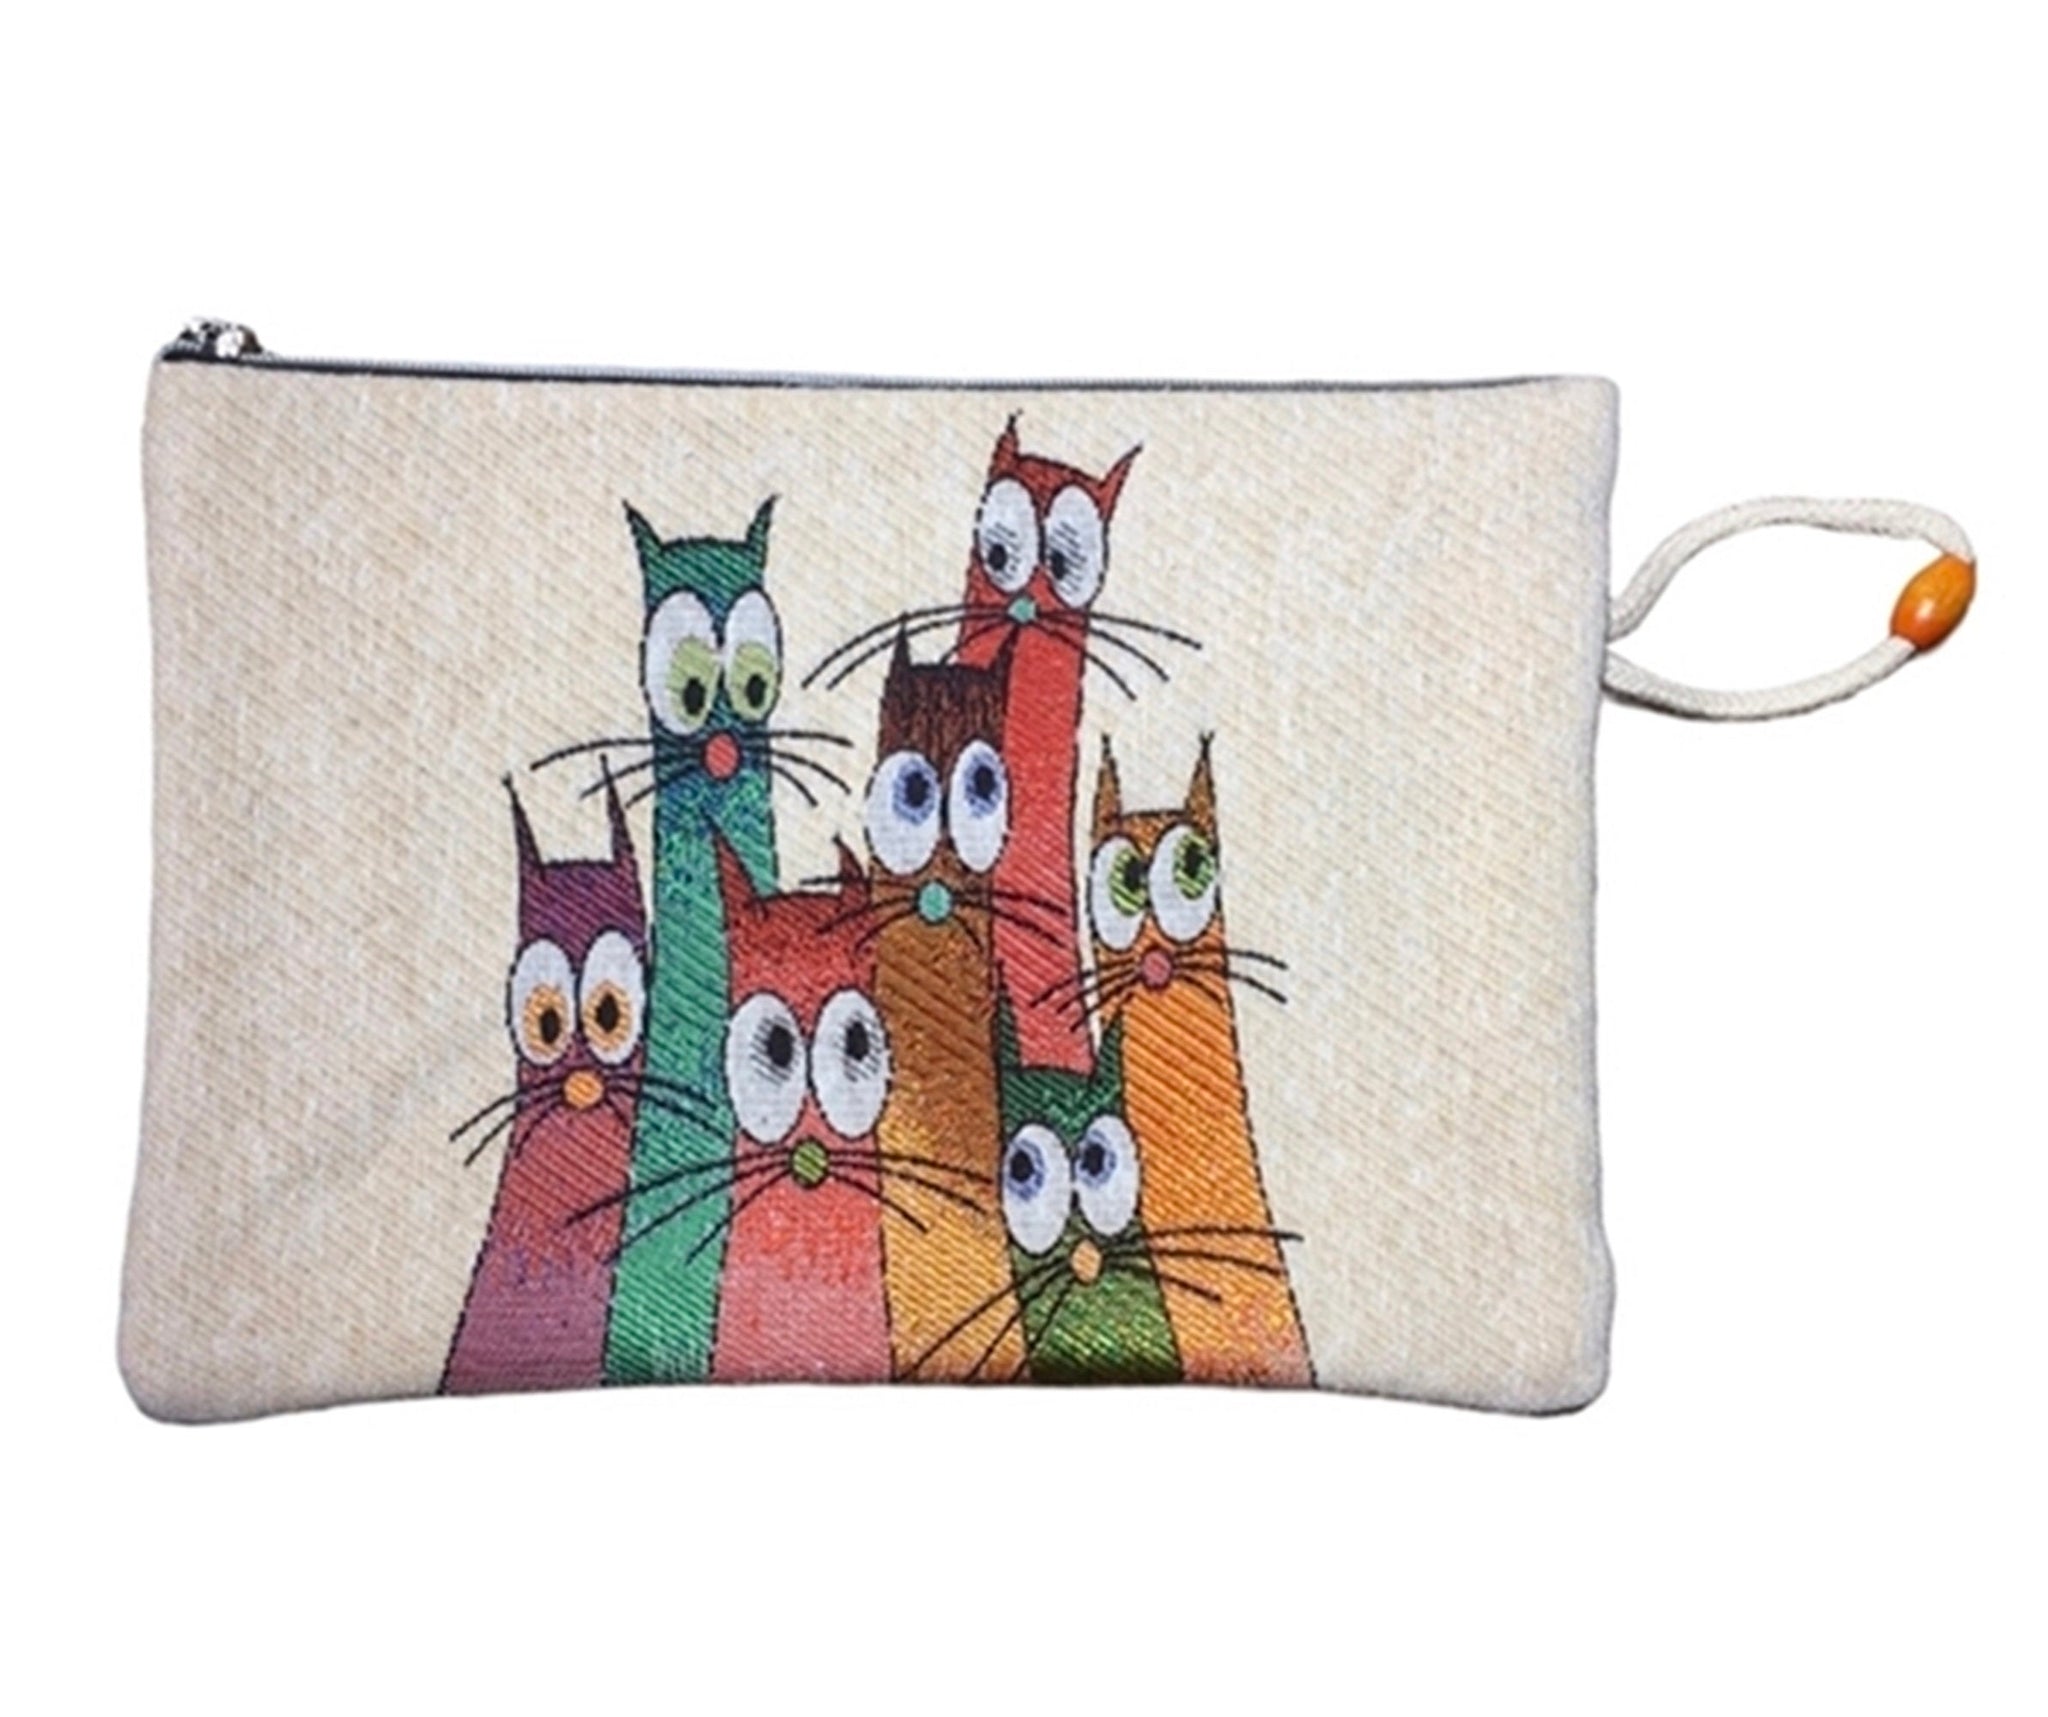 Cats Vintage Style Ethnic Turkish Boho Purse Bag | Clutch | Cosmetic bag | Hippie Bag | Bohemian Bag | Hand Bag | Clutch Purse | Kilim 002